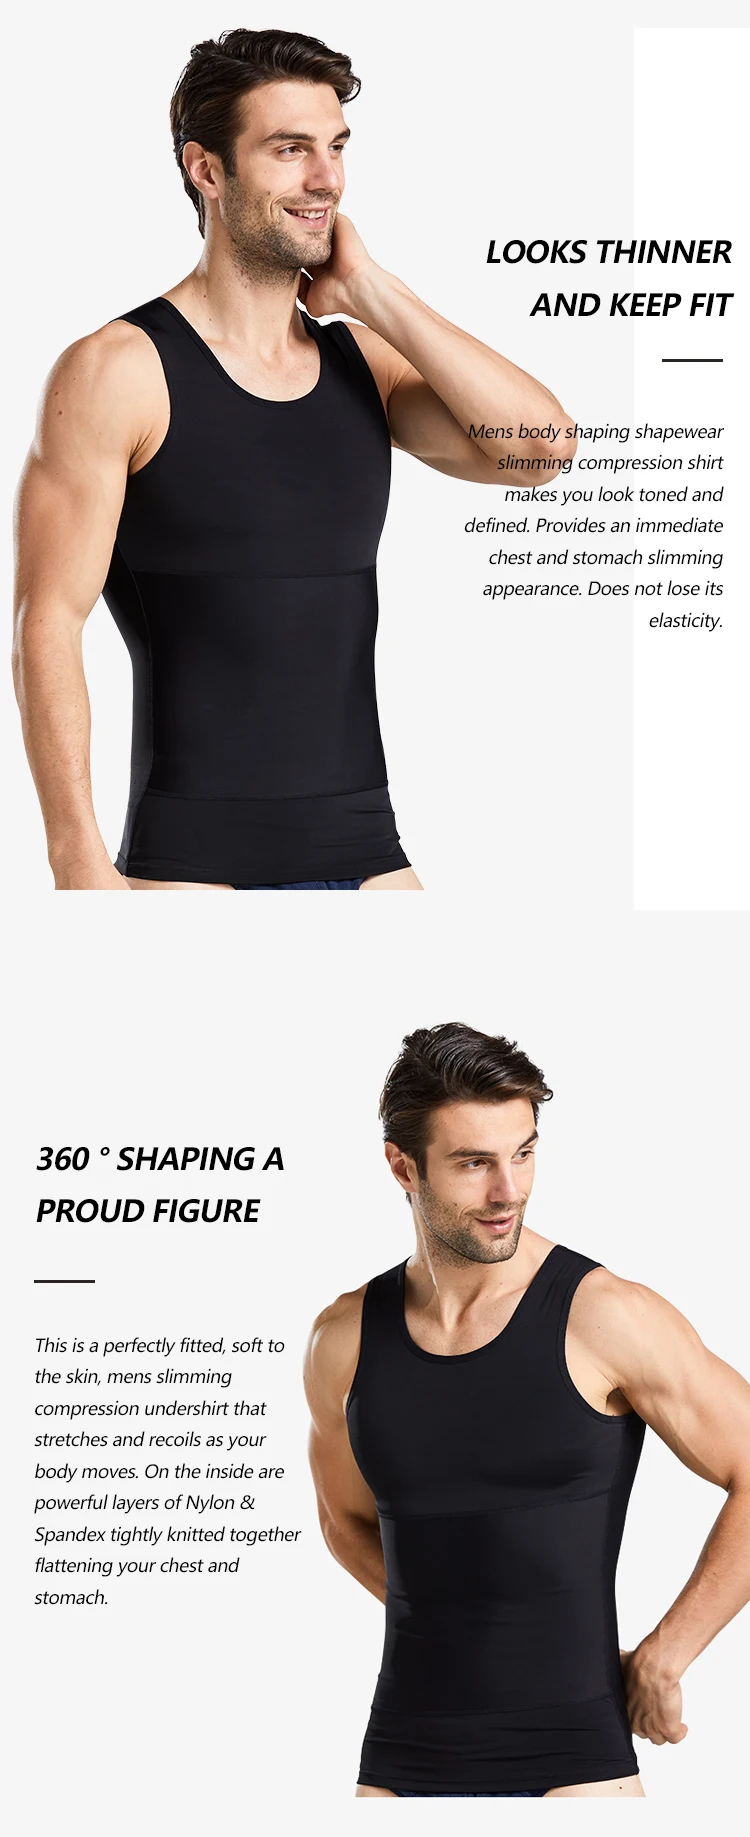 Enerup Compression Slim Tank Top Undershirt Slimming Body Shaper Men Vest